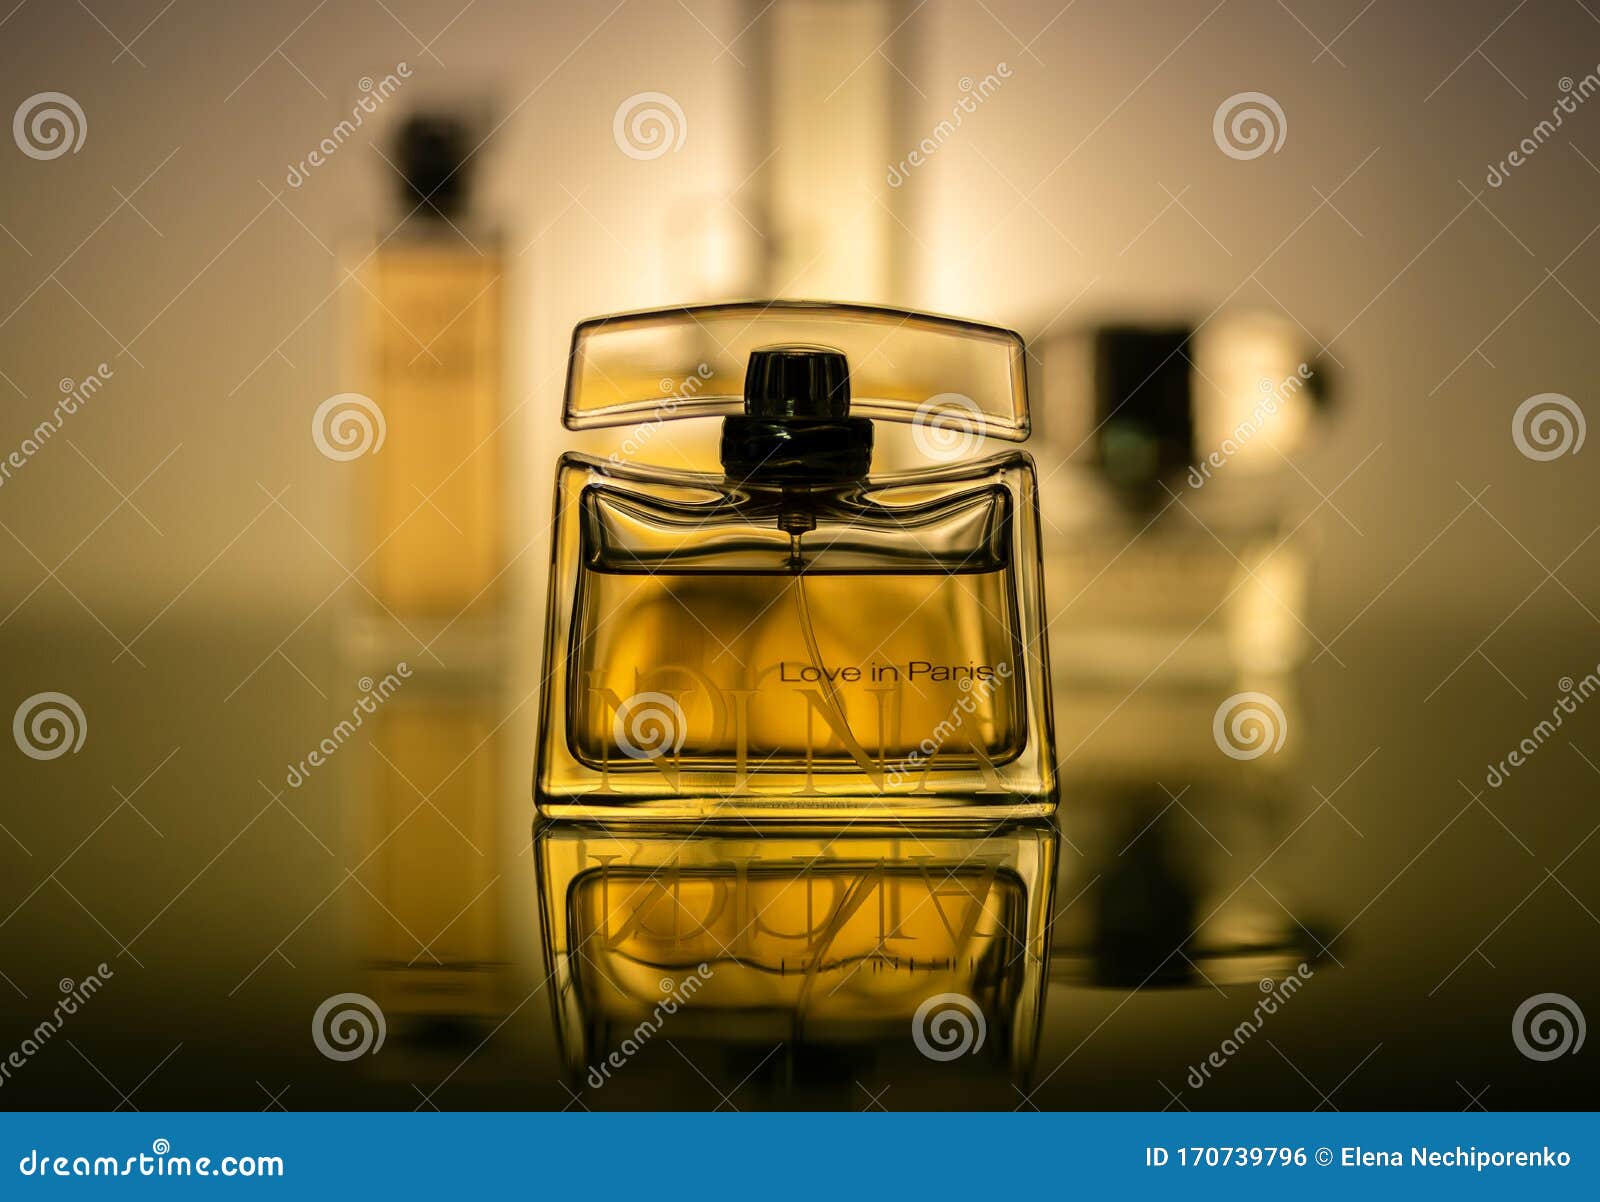 Nina Ricci Perfume Bottle in a Perfume Store Editorial Photo - Image of ...